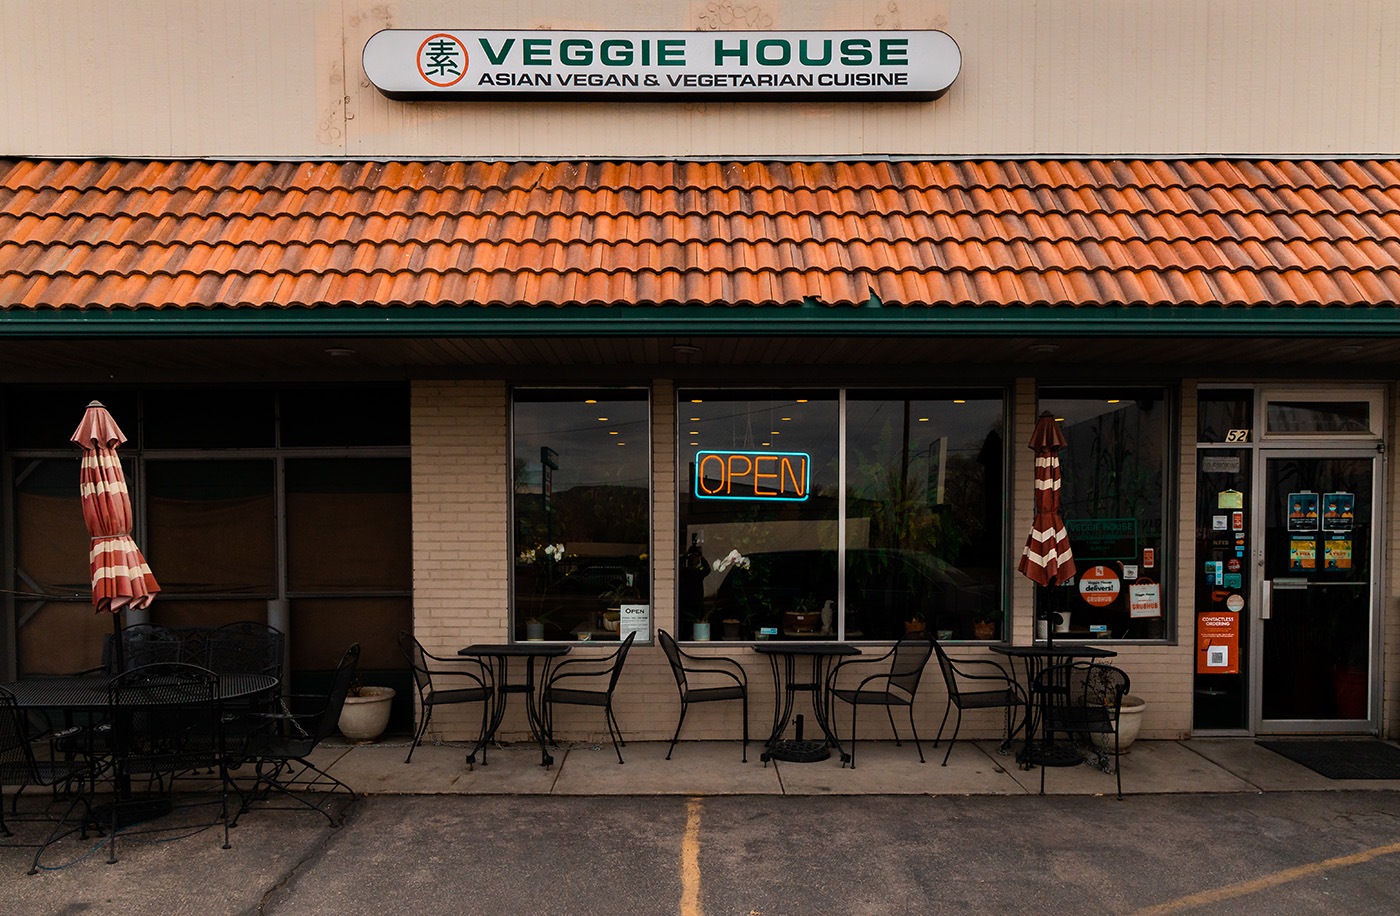 Veggie House is a star of the vegan and vegetarian diet in Salt Lake.